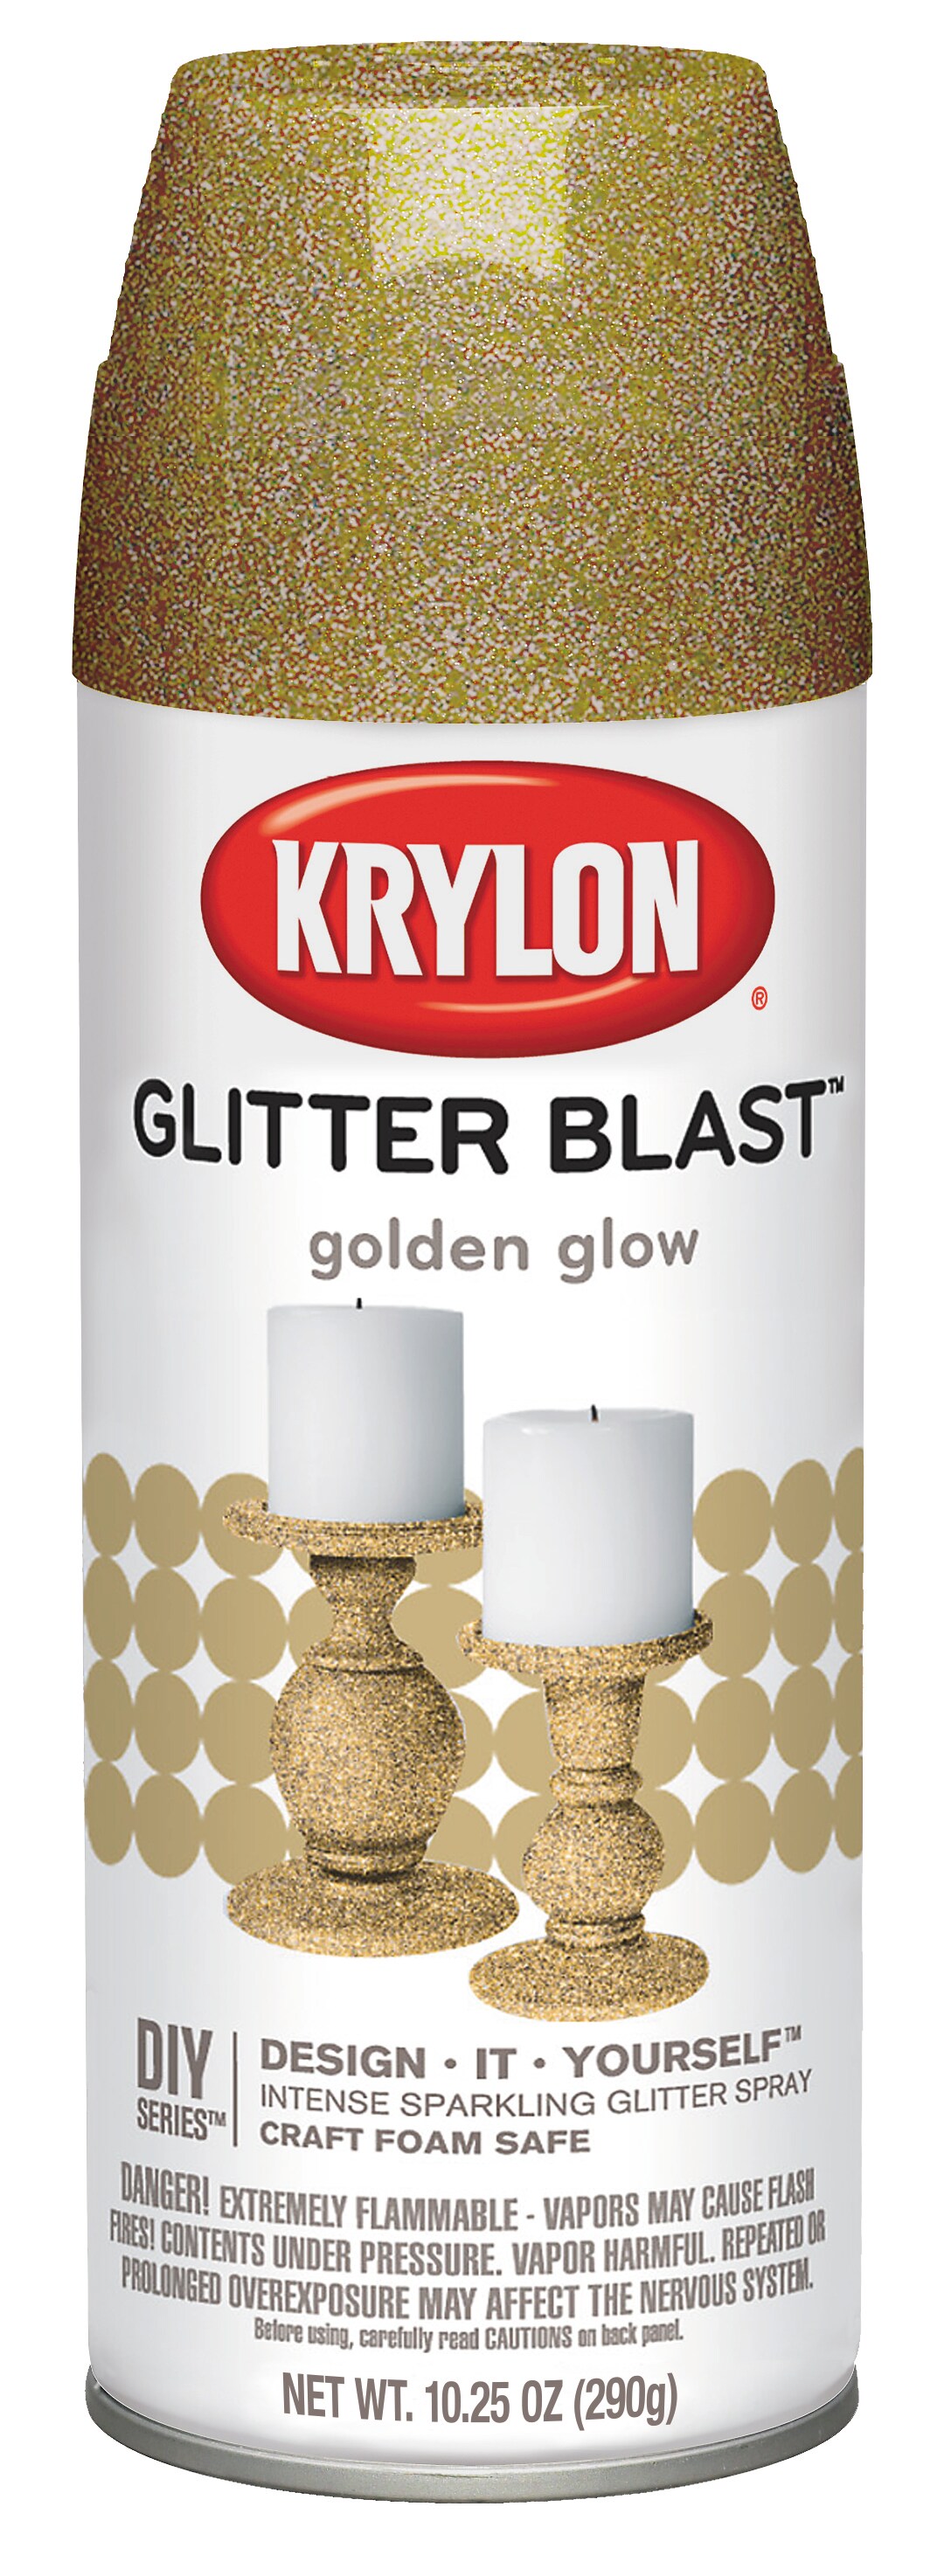 Krylon Glitter Blast Gloss Golden Glow Glitter Spray Paint (NET WT